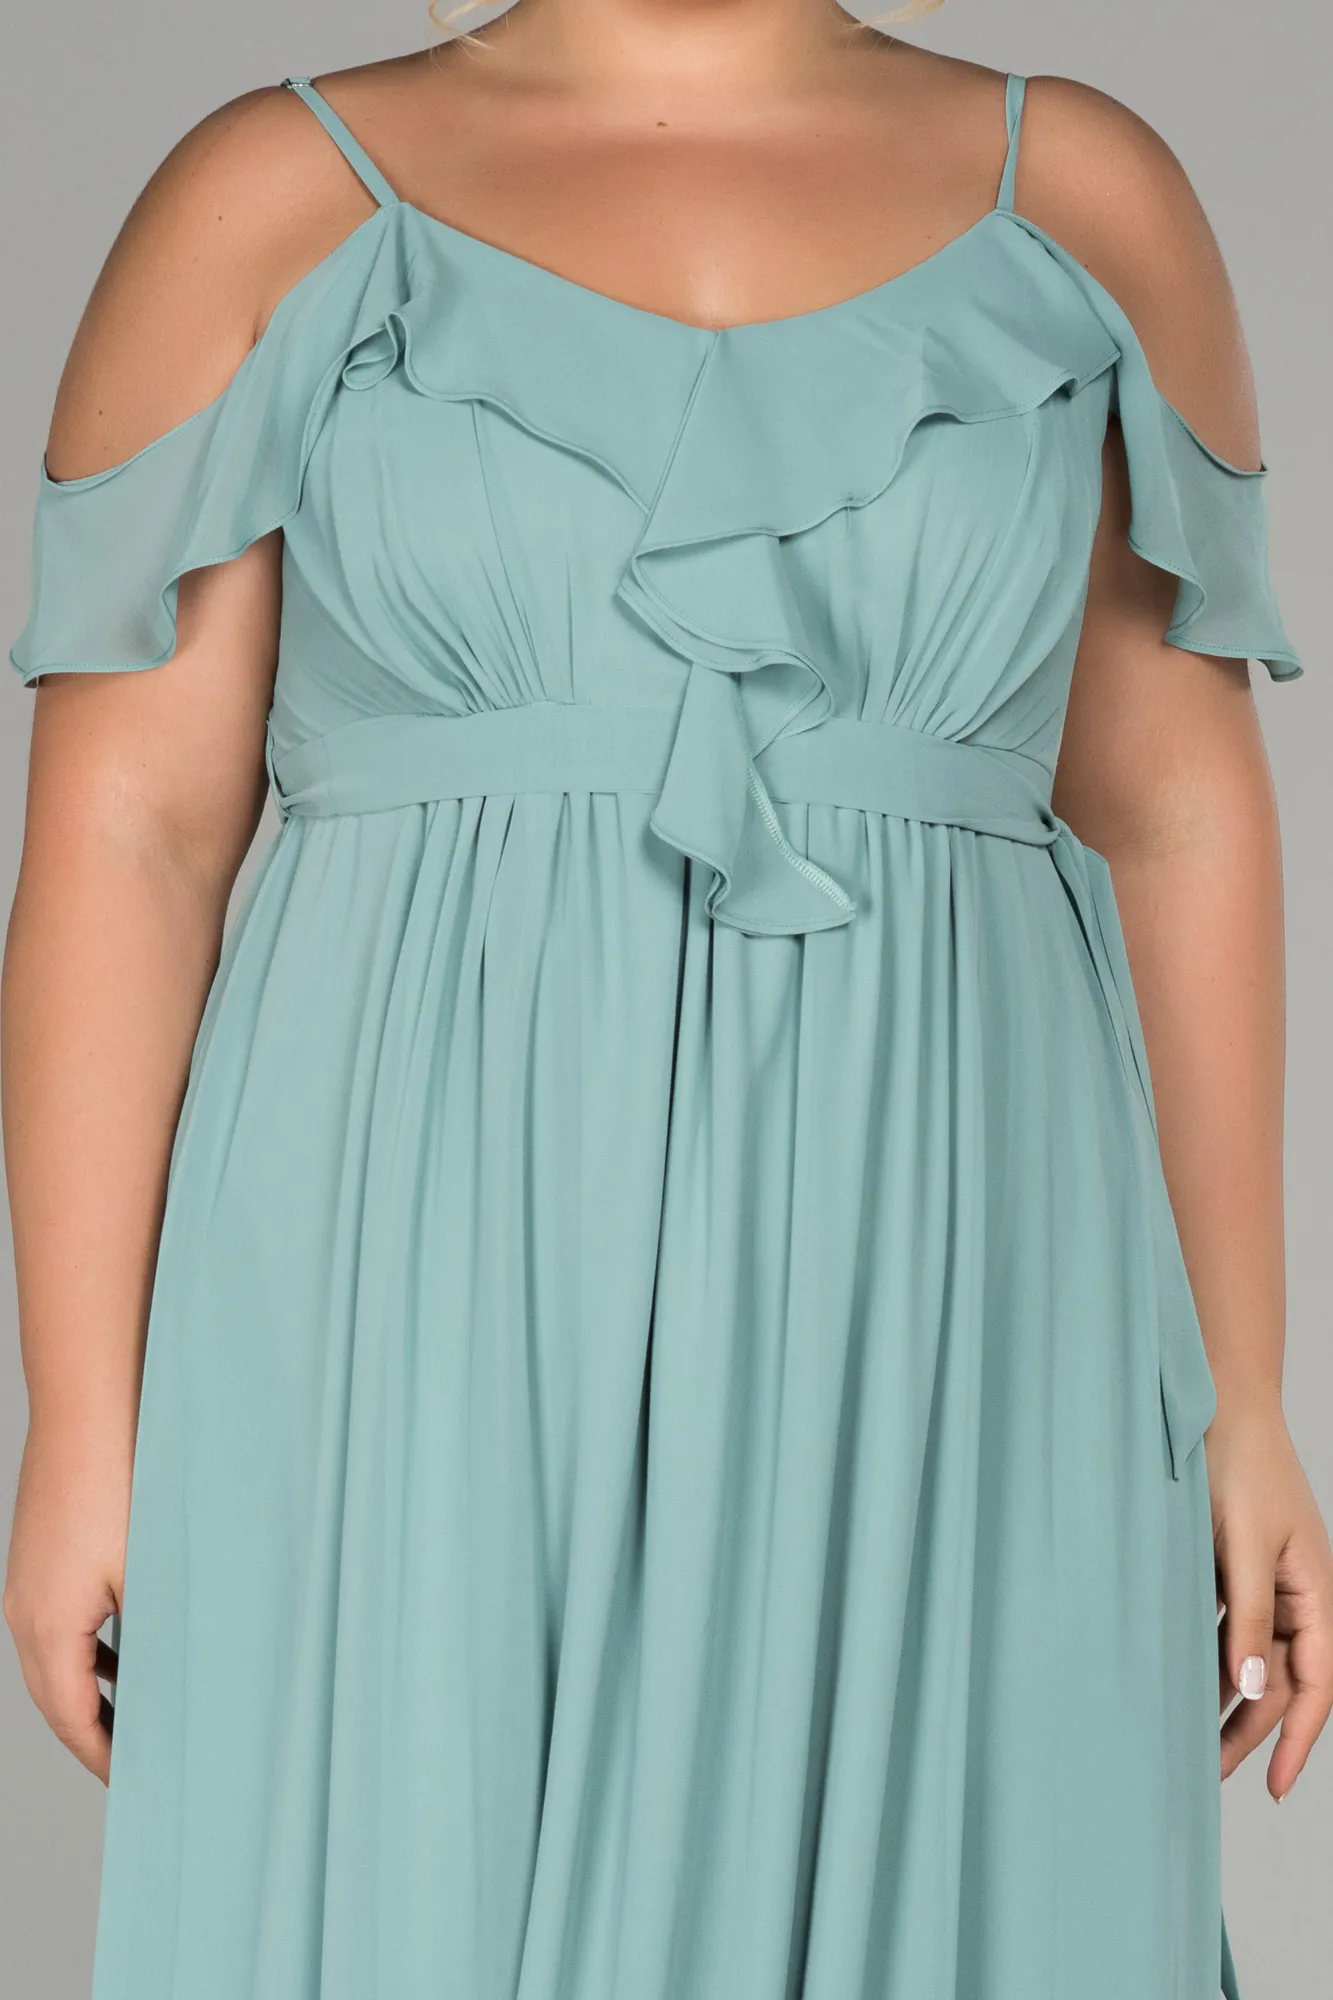 Turquoise-Long Plus Size Evening Dress ABU1449